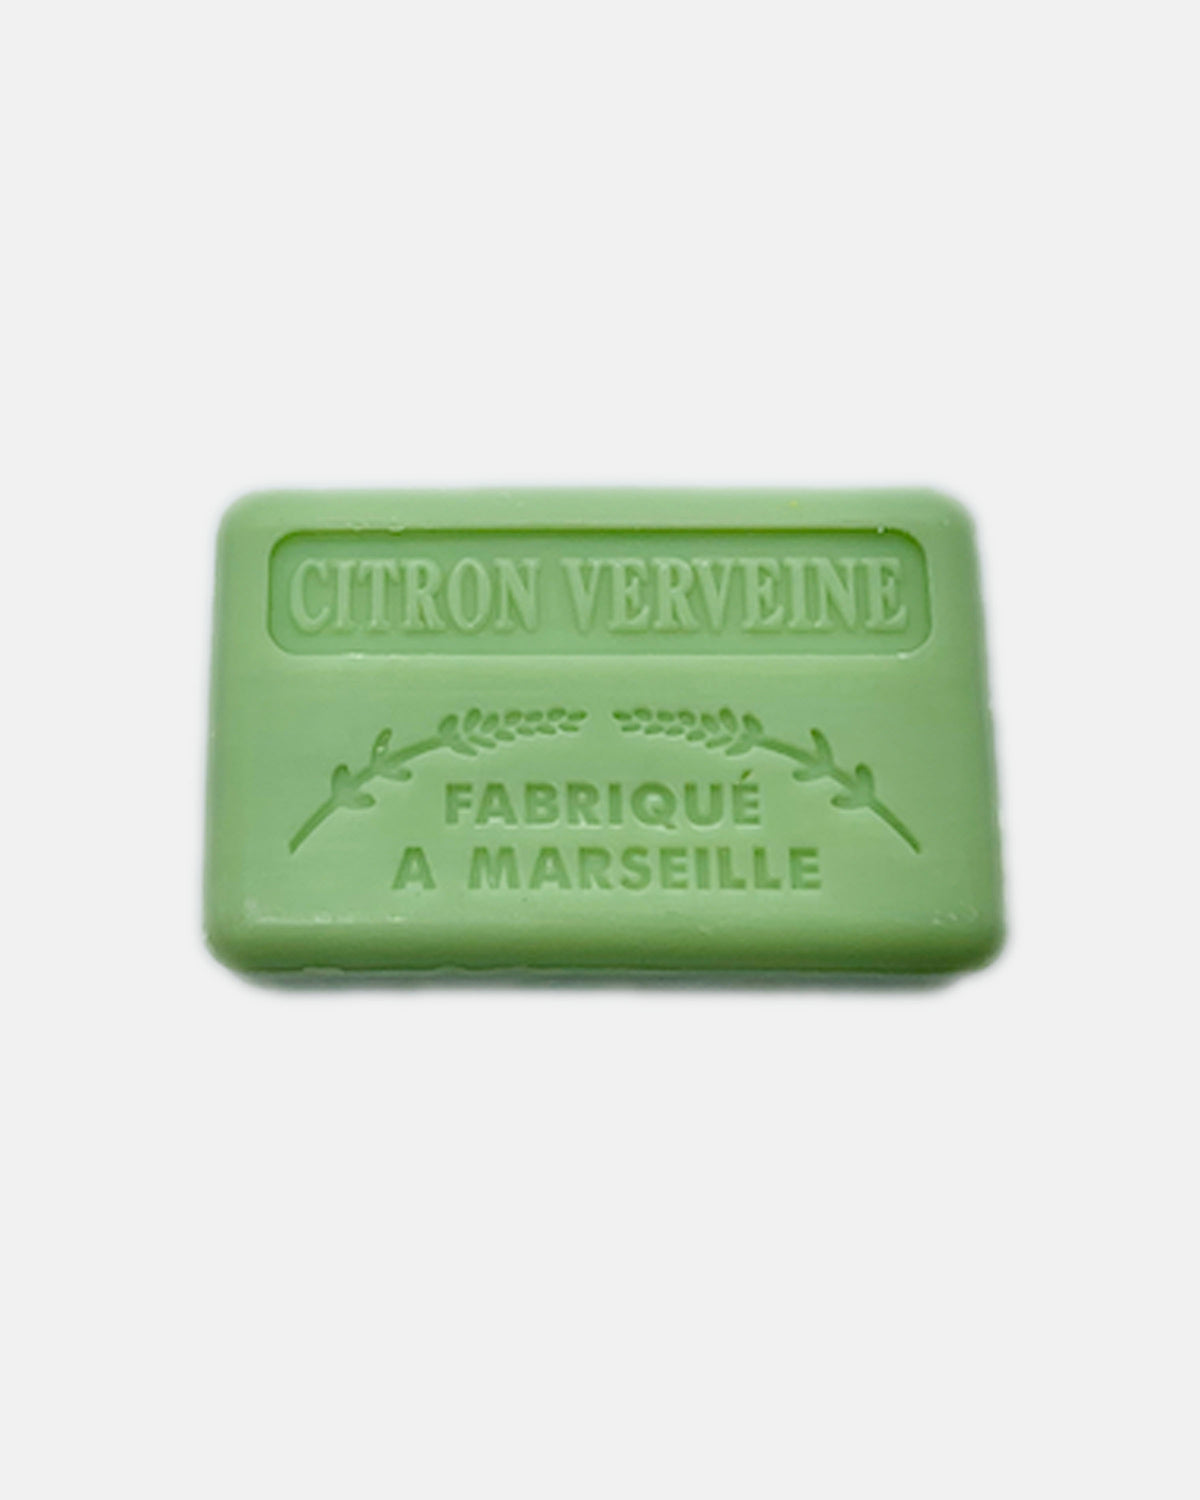 125G Savon De Marseille  Citron Verveine (Lemon Verbena) French Soap